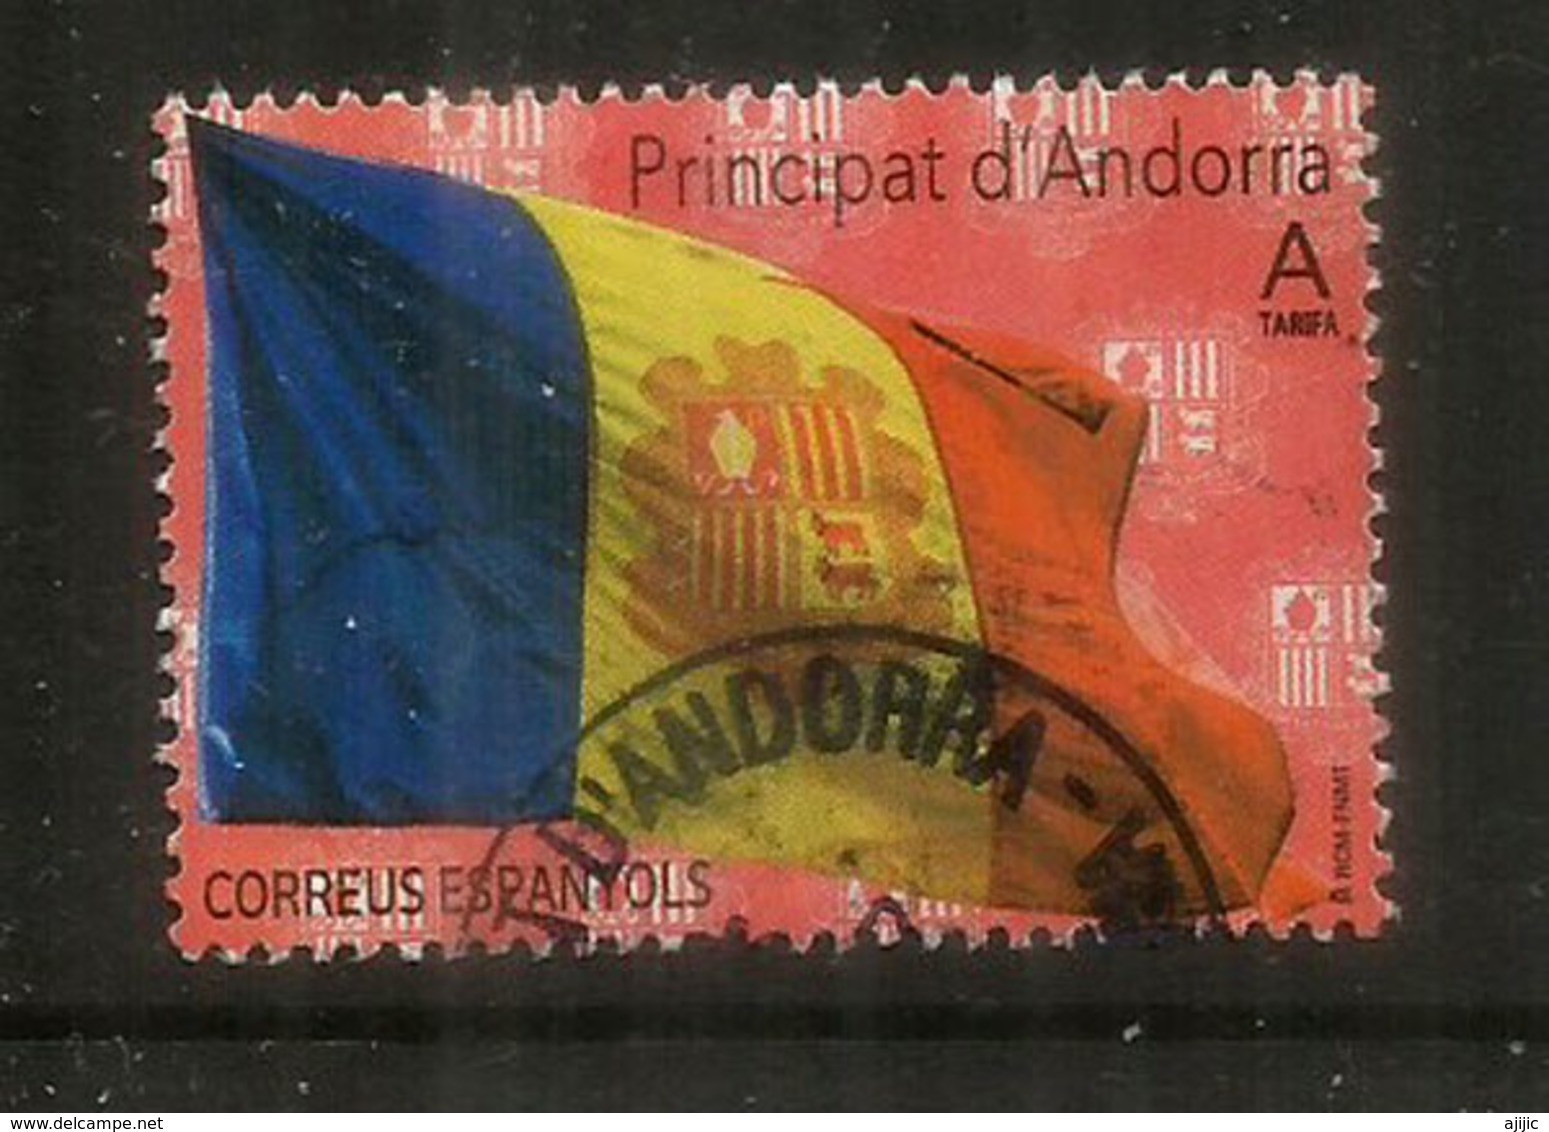 Bandera D'Andorra /Drapeau D'Andorre. (Poder és Més Fort) 2020,  Oblitéré,  1 ère Qualité. - Used Stamps